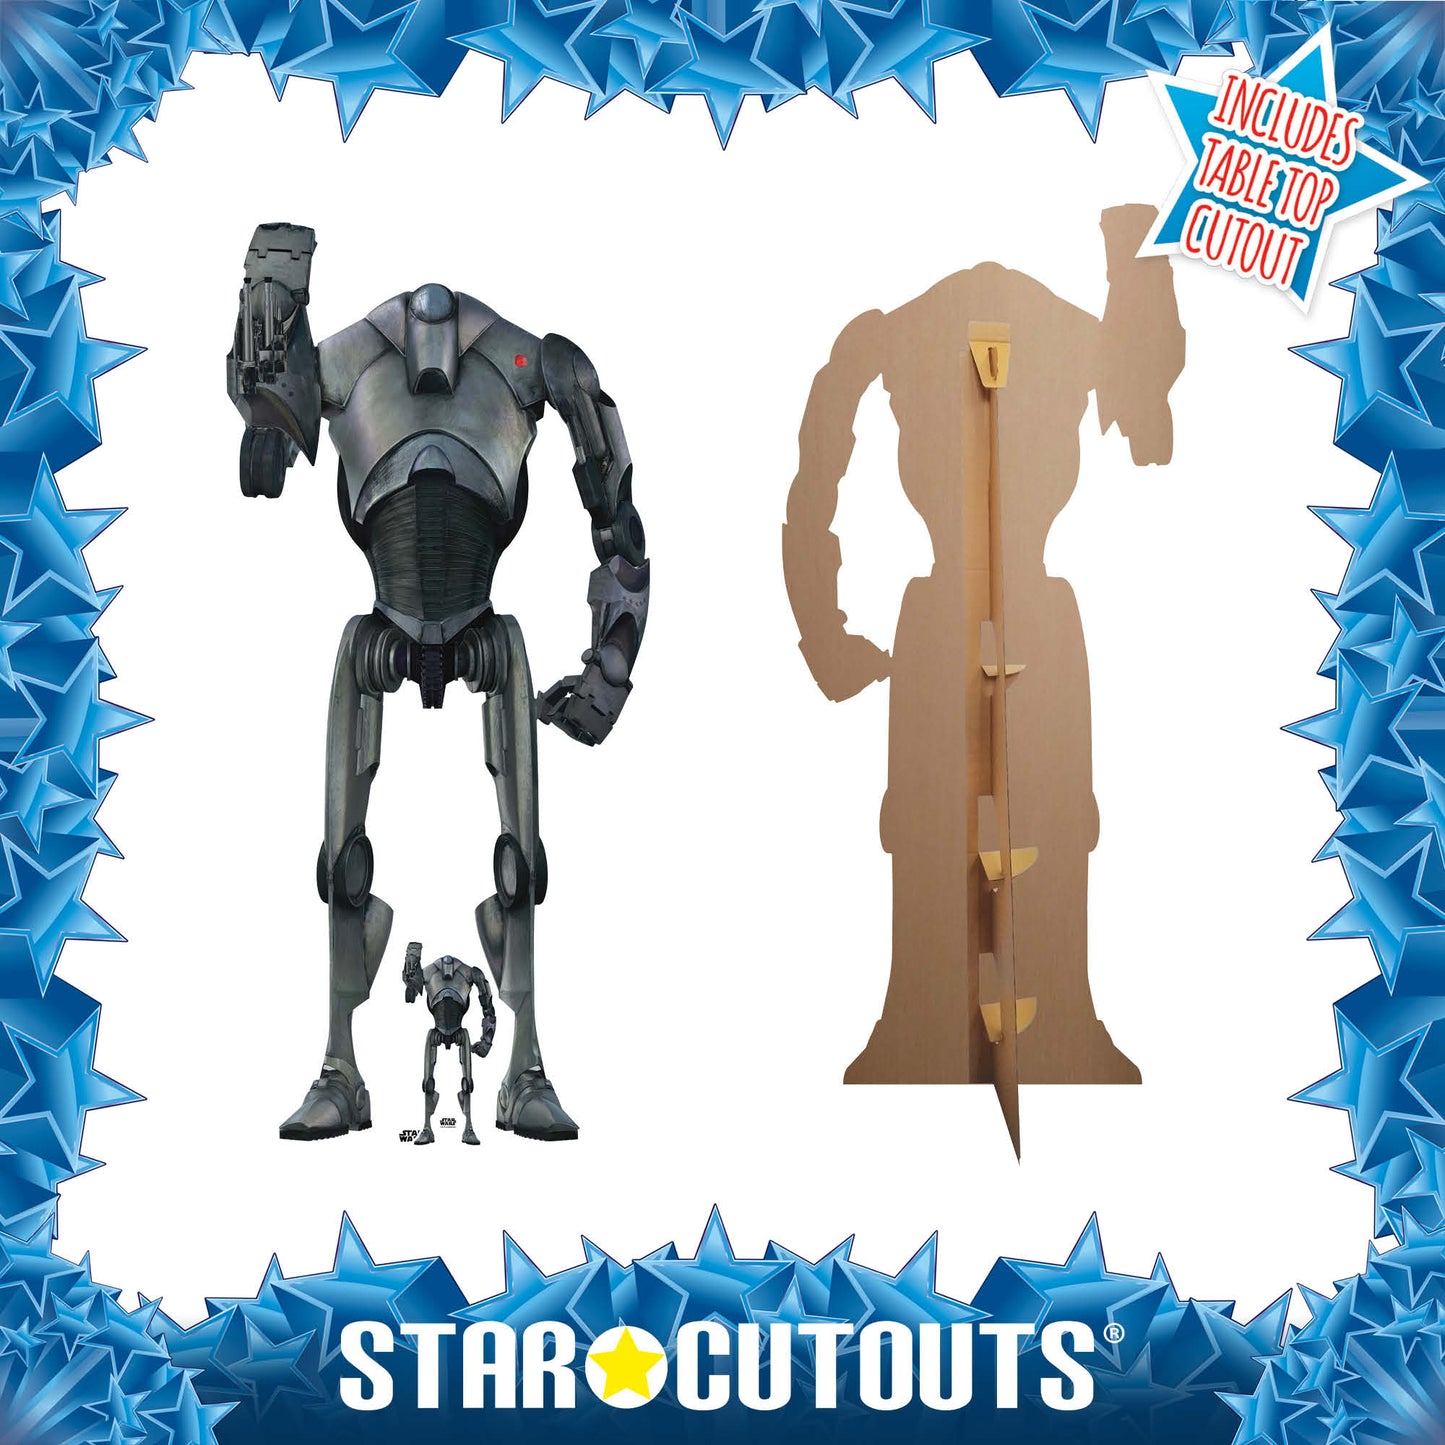 Super Battle Droid Star Wars Cardboard Cut Out Height 196cm